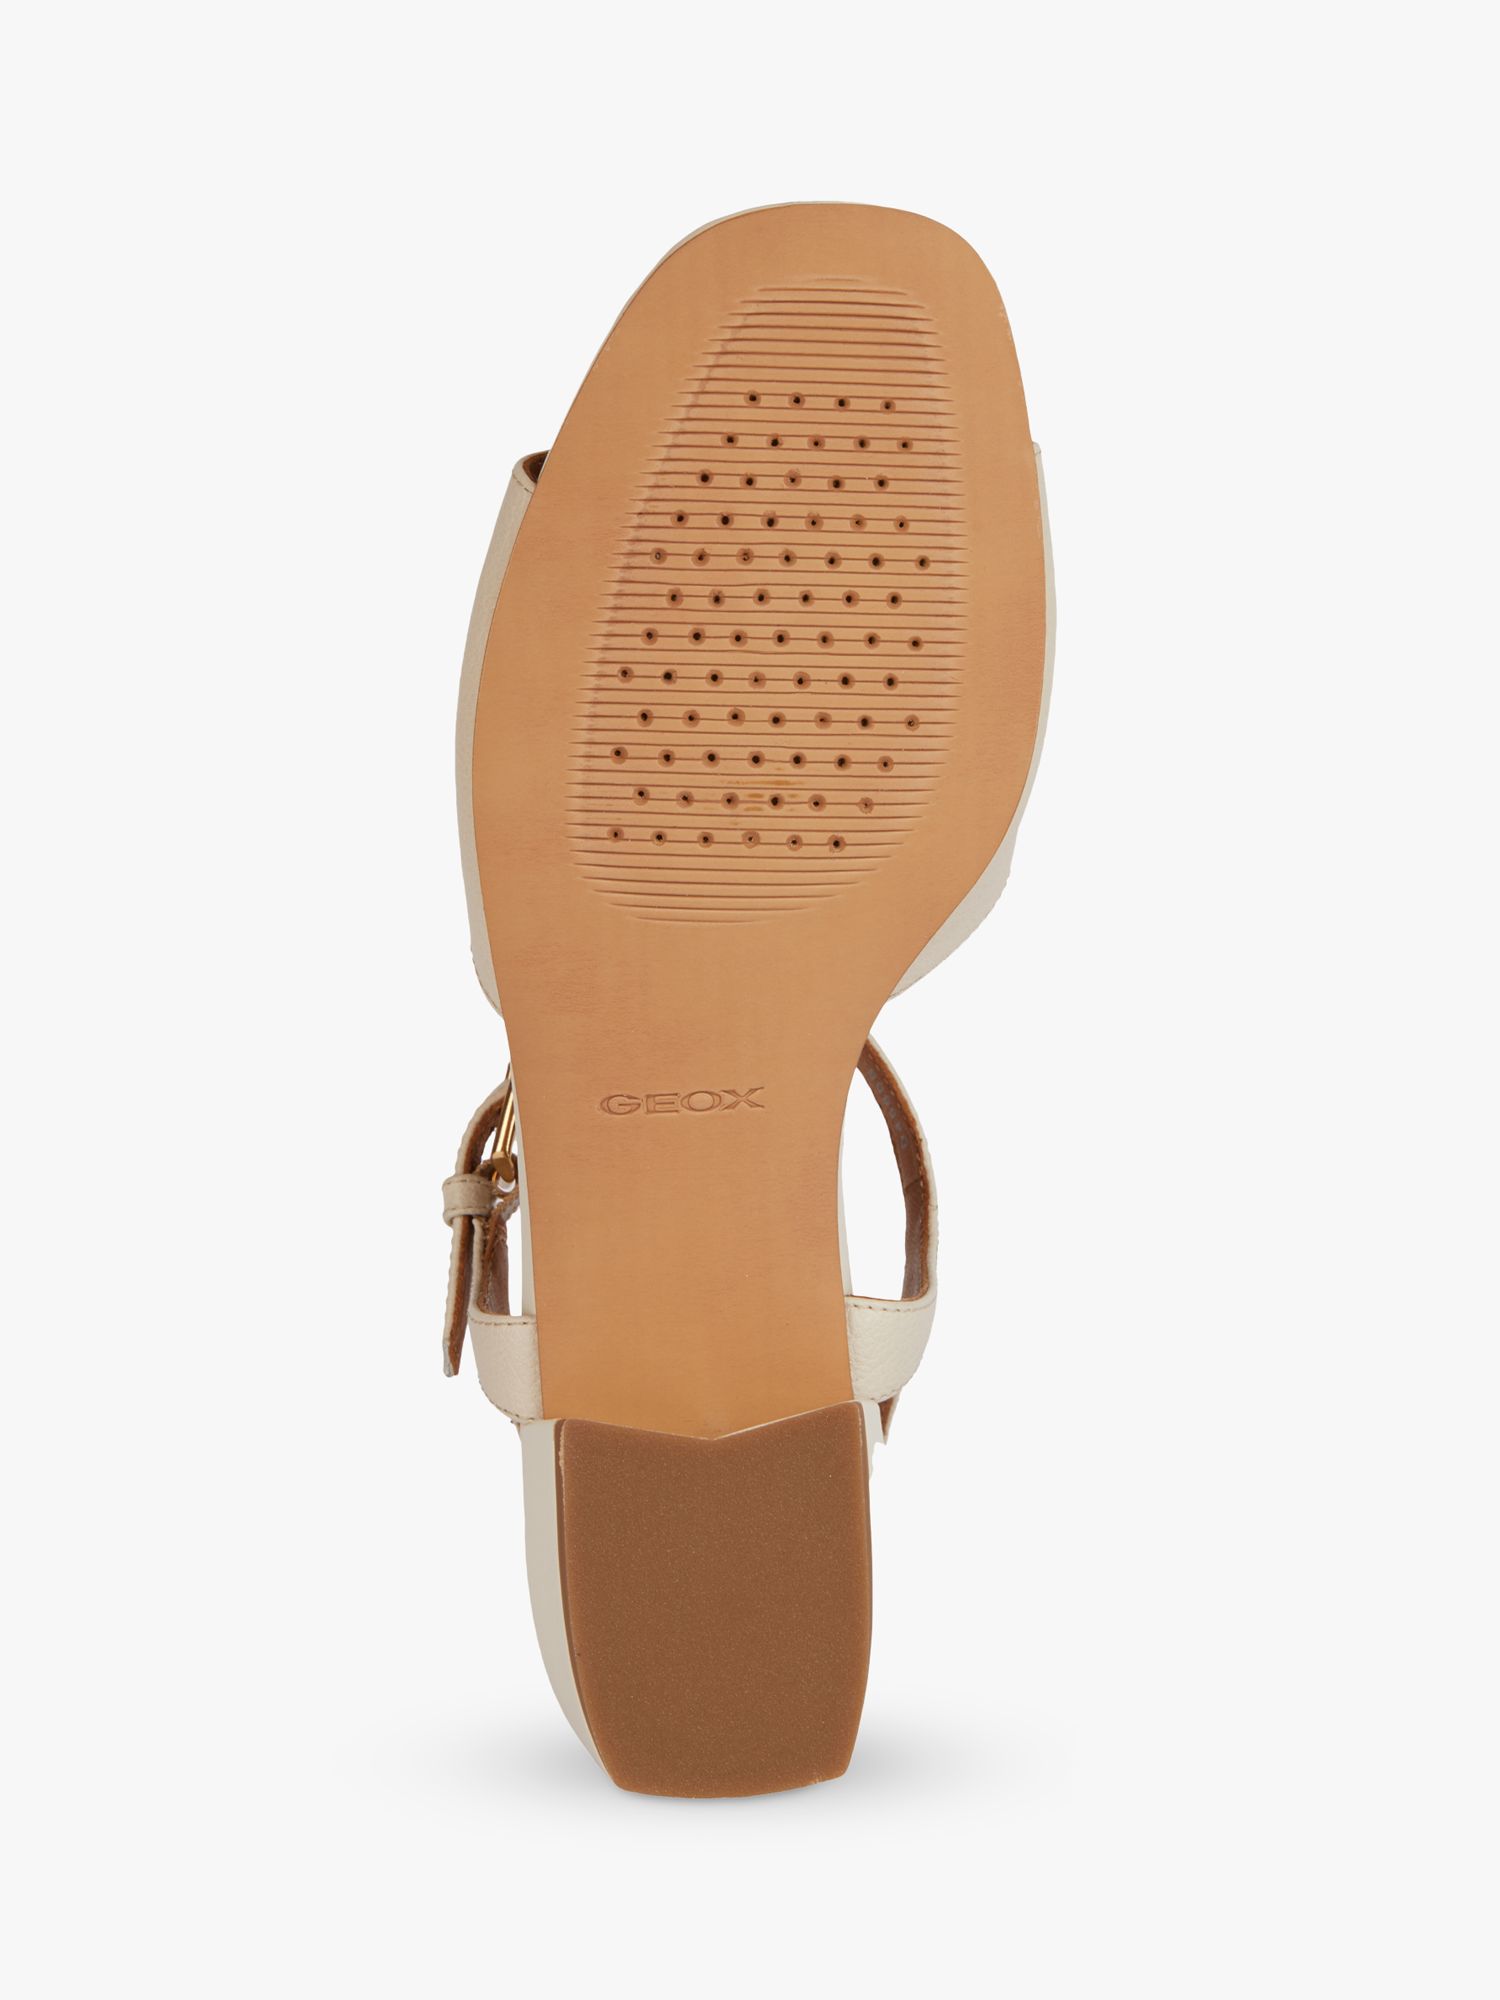 Geox New Eraklia Leather Sandals, Sand, EU41